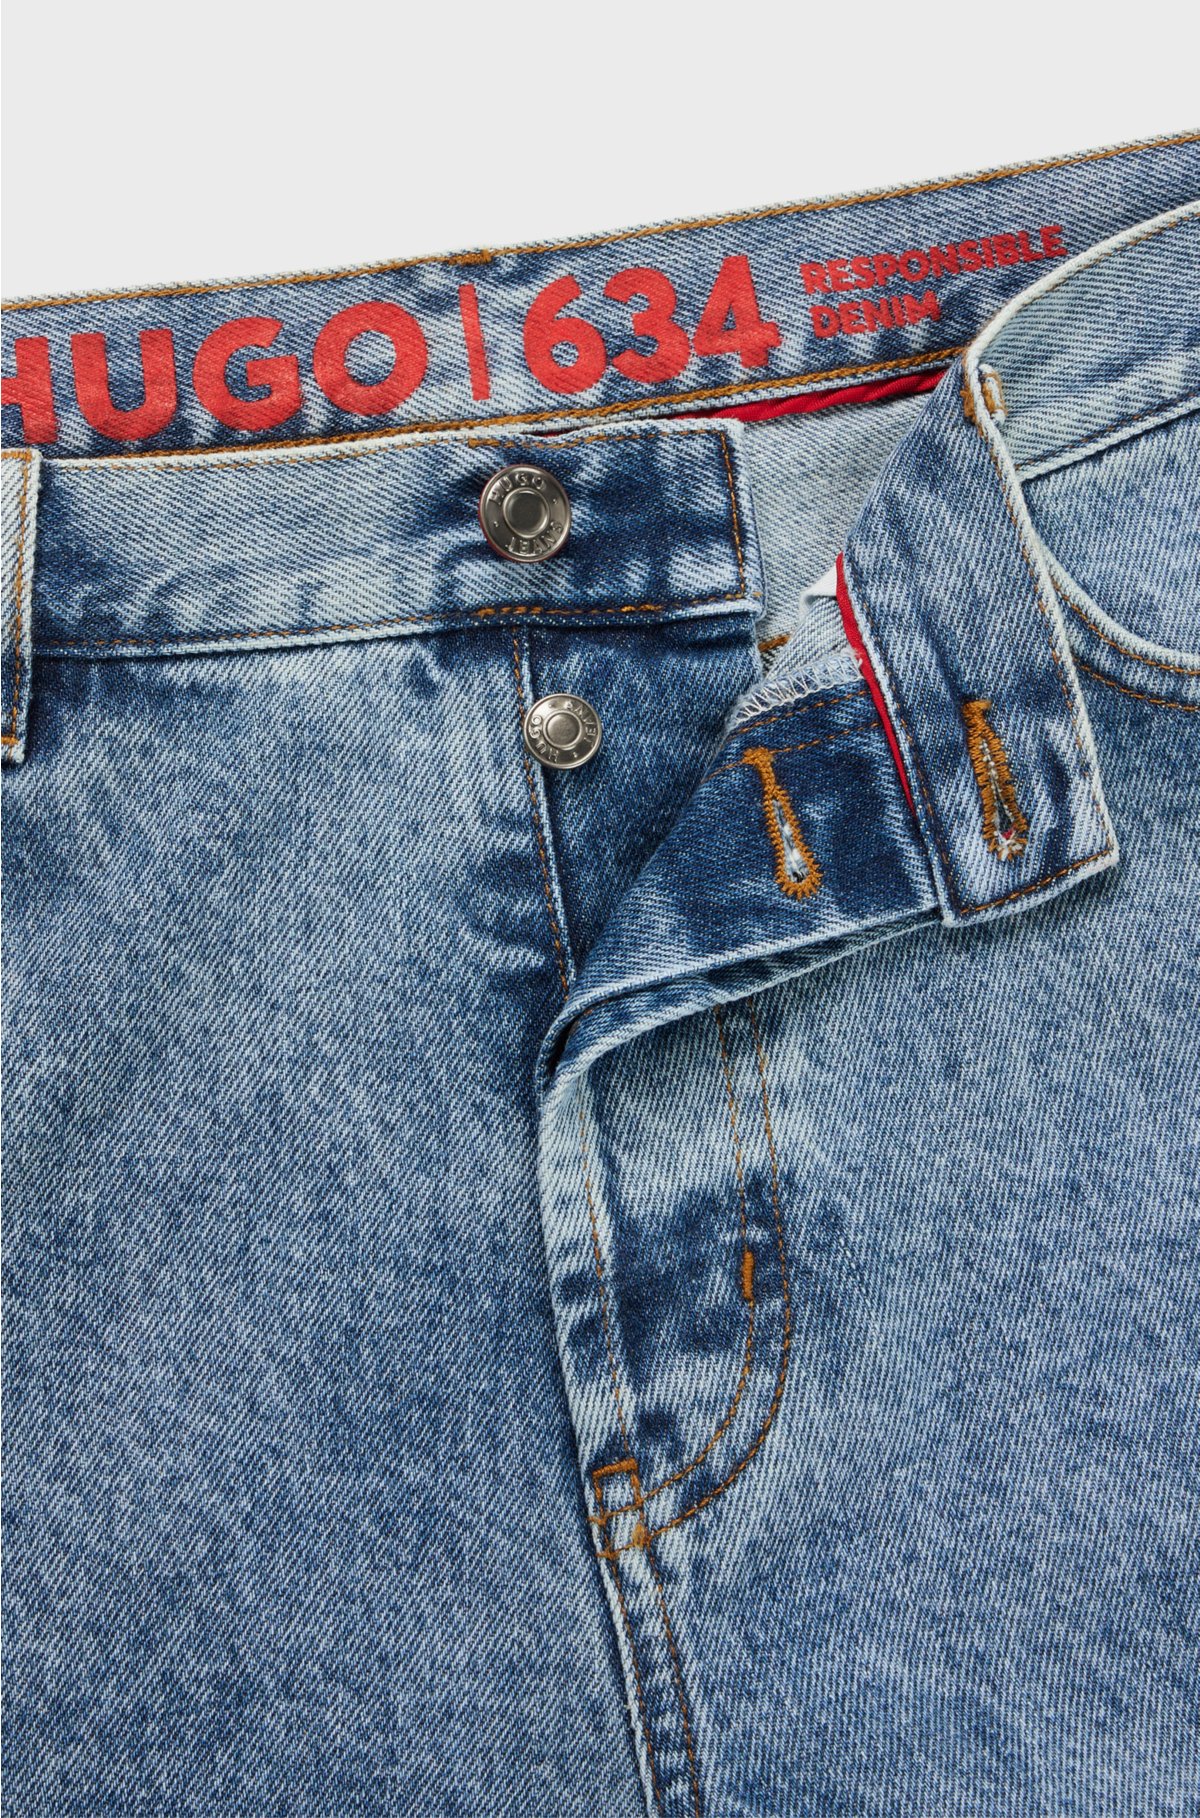 Tapered-fit jeans in blue rigid denim, Blue